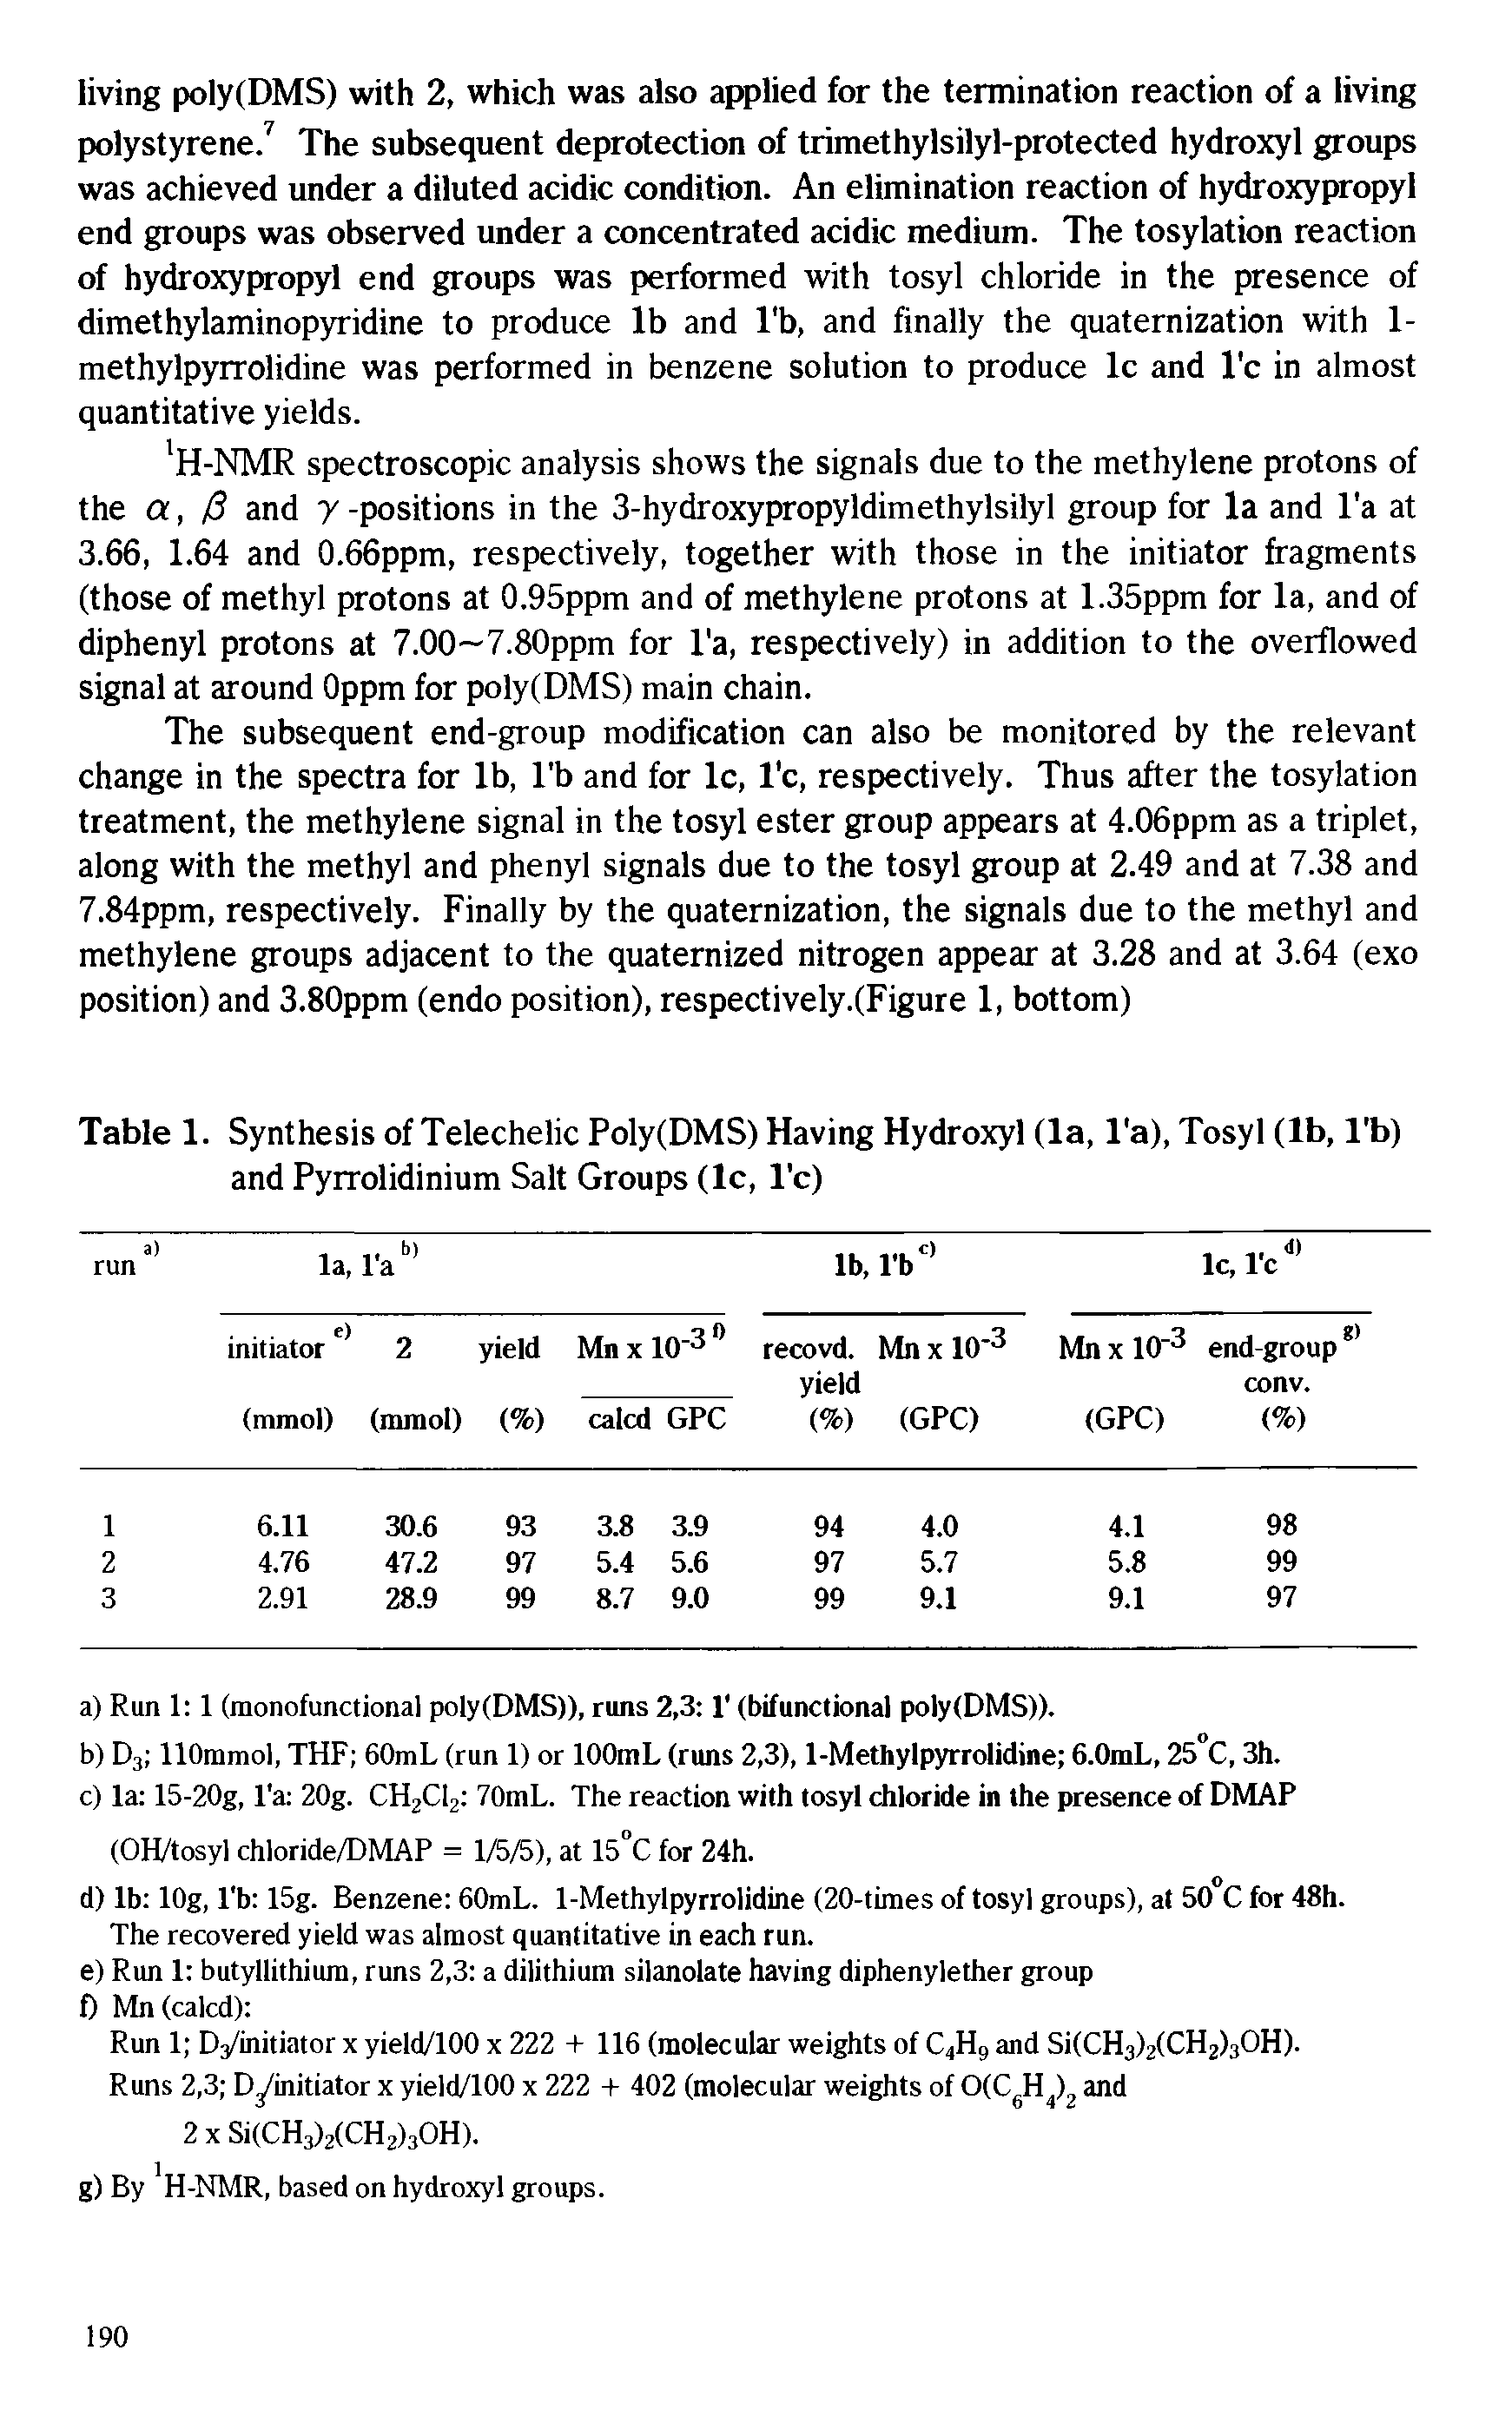 Table 1. Synthesis of Telechelic Poly(DMS) Having Hydroxyl (la, l a), Tosyl (lb, l b) and Pyrrolidinium Salt Groups (lc, l c)...